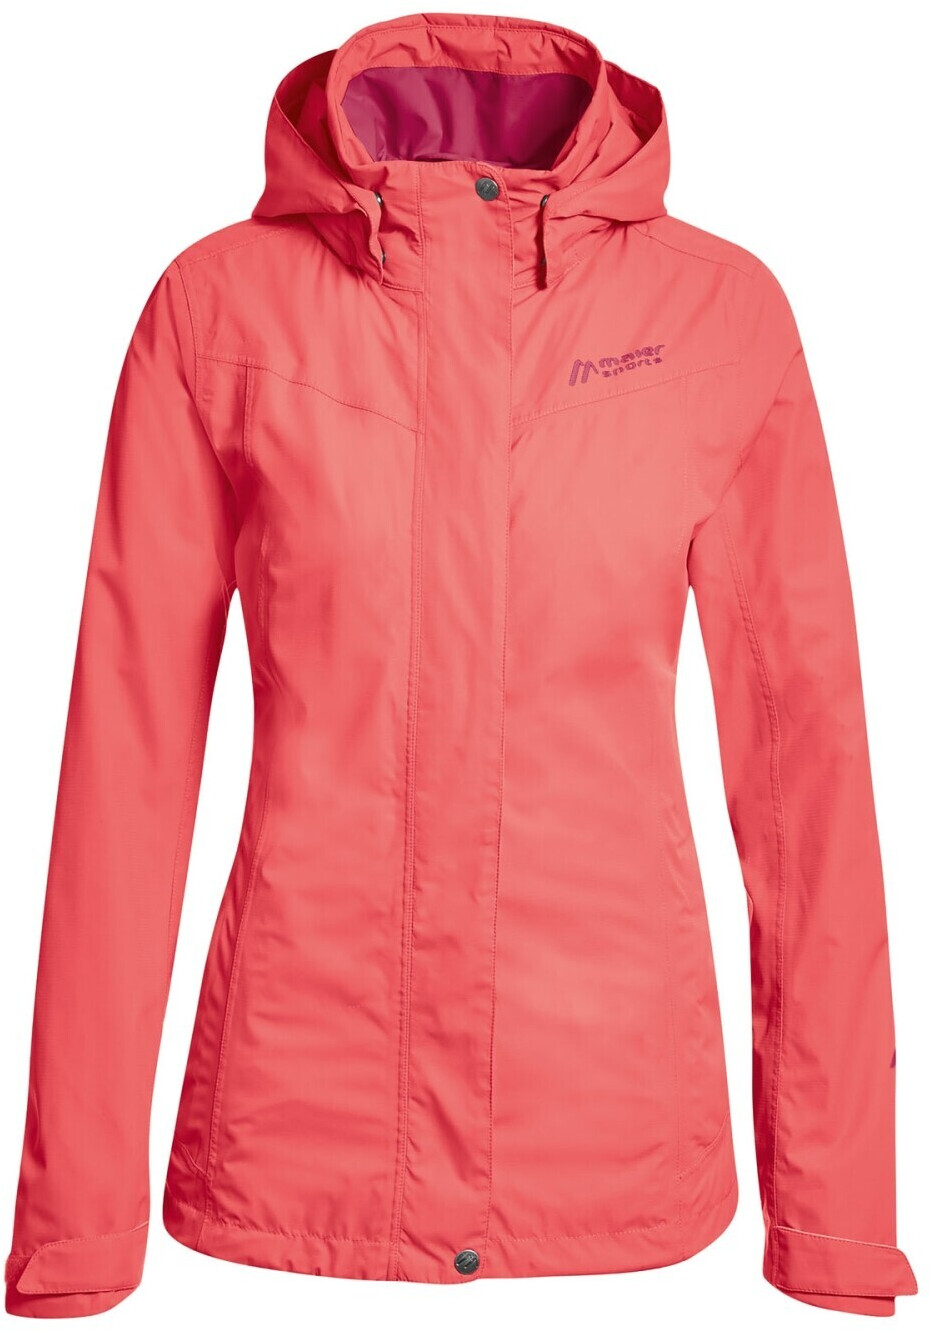 Maier Sports Metor Jacket Women paradise pink ab 99,90 € | Preisvergleich  bei